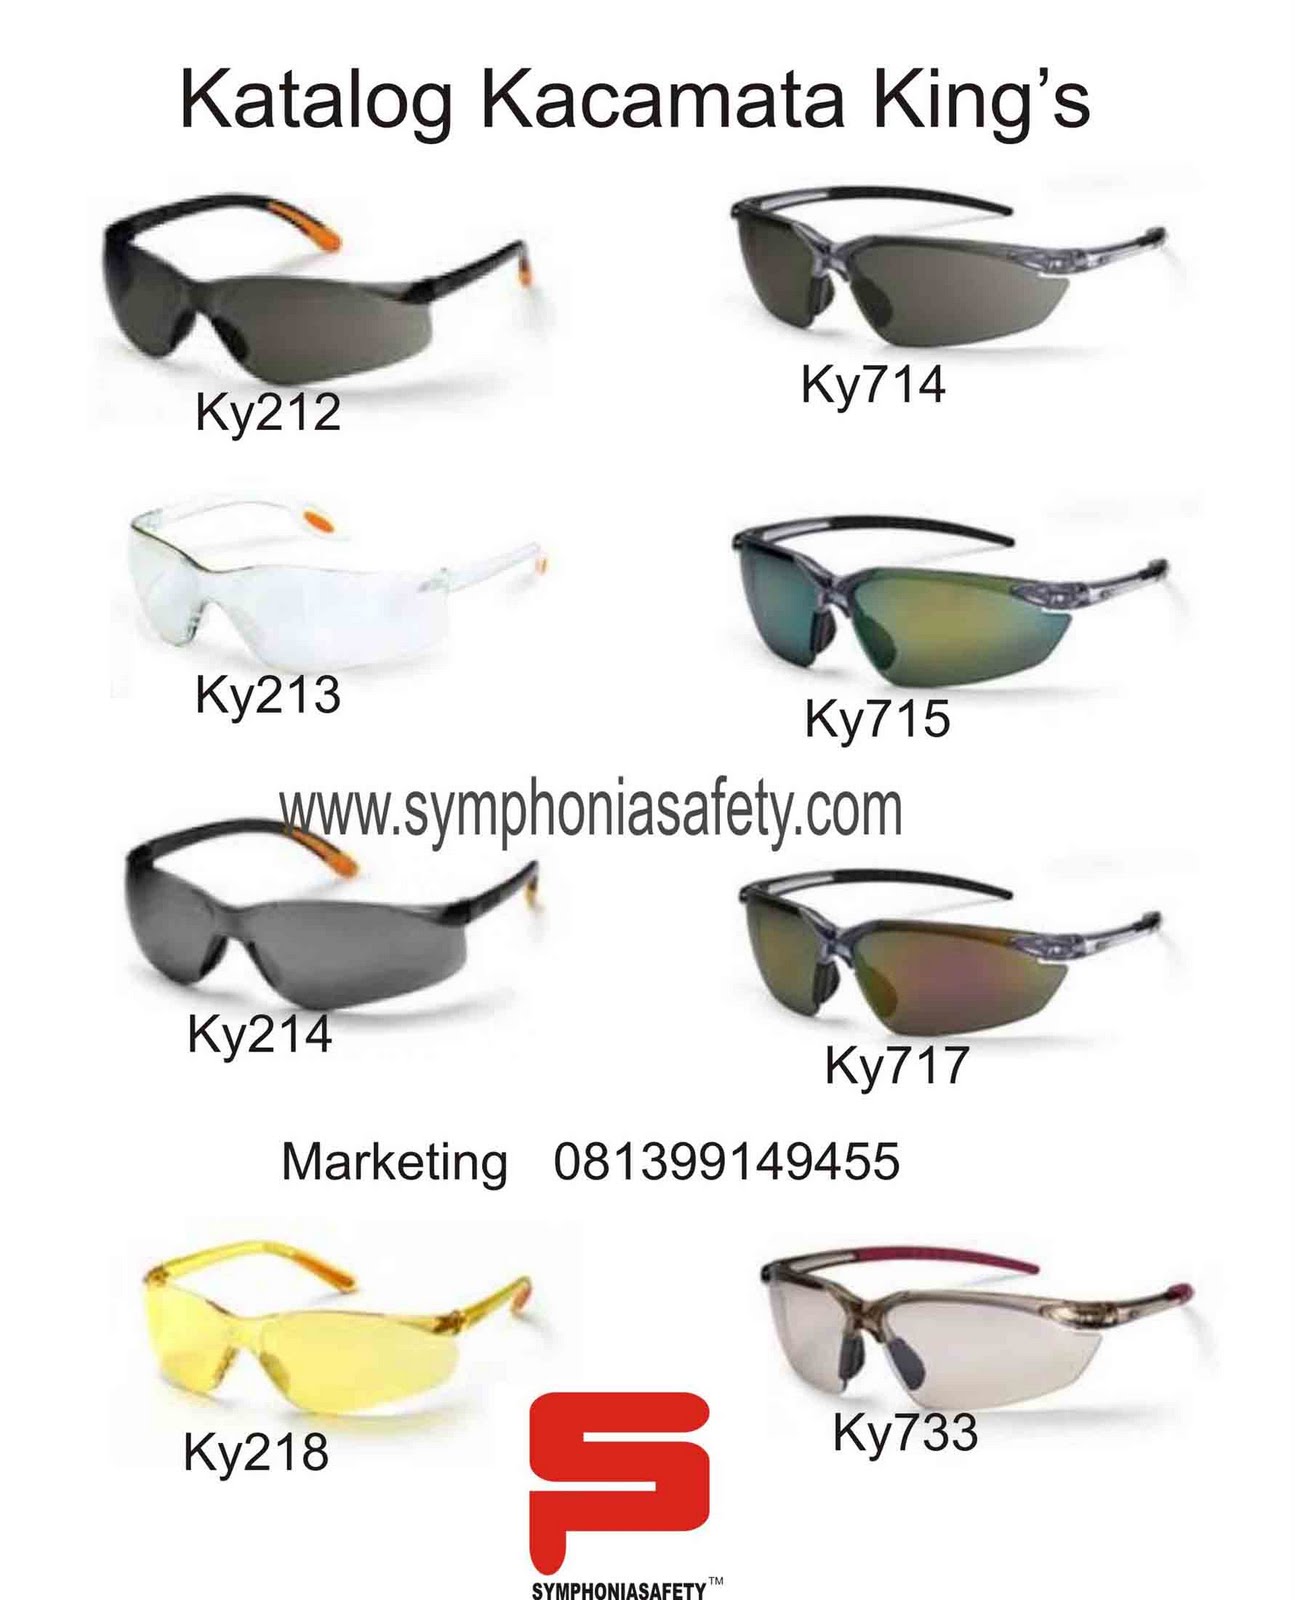  Kacamata  King s  Katalog Symphonia Safety  Seragam dan 